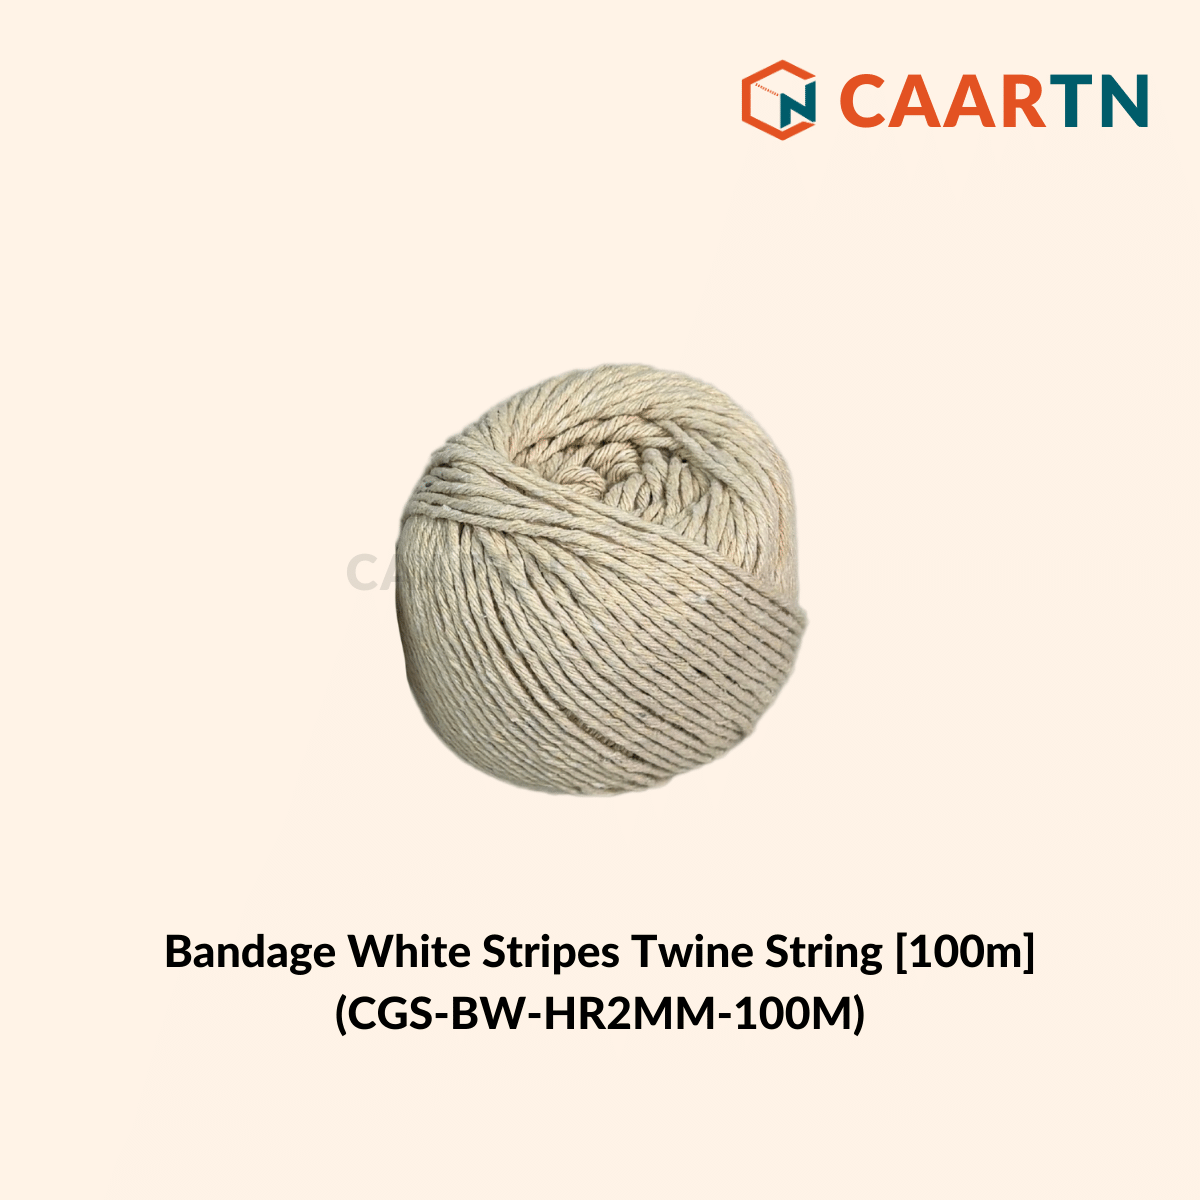 https://img.myshopline.com/image/store/1652247807523/Bandage-White-Stripes-Twine-String-[100m].png?w=1200&h=1200